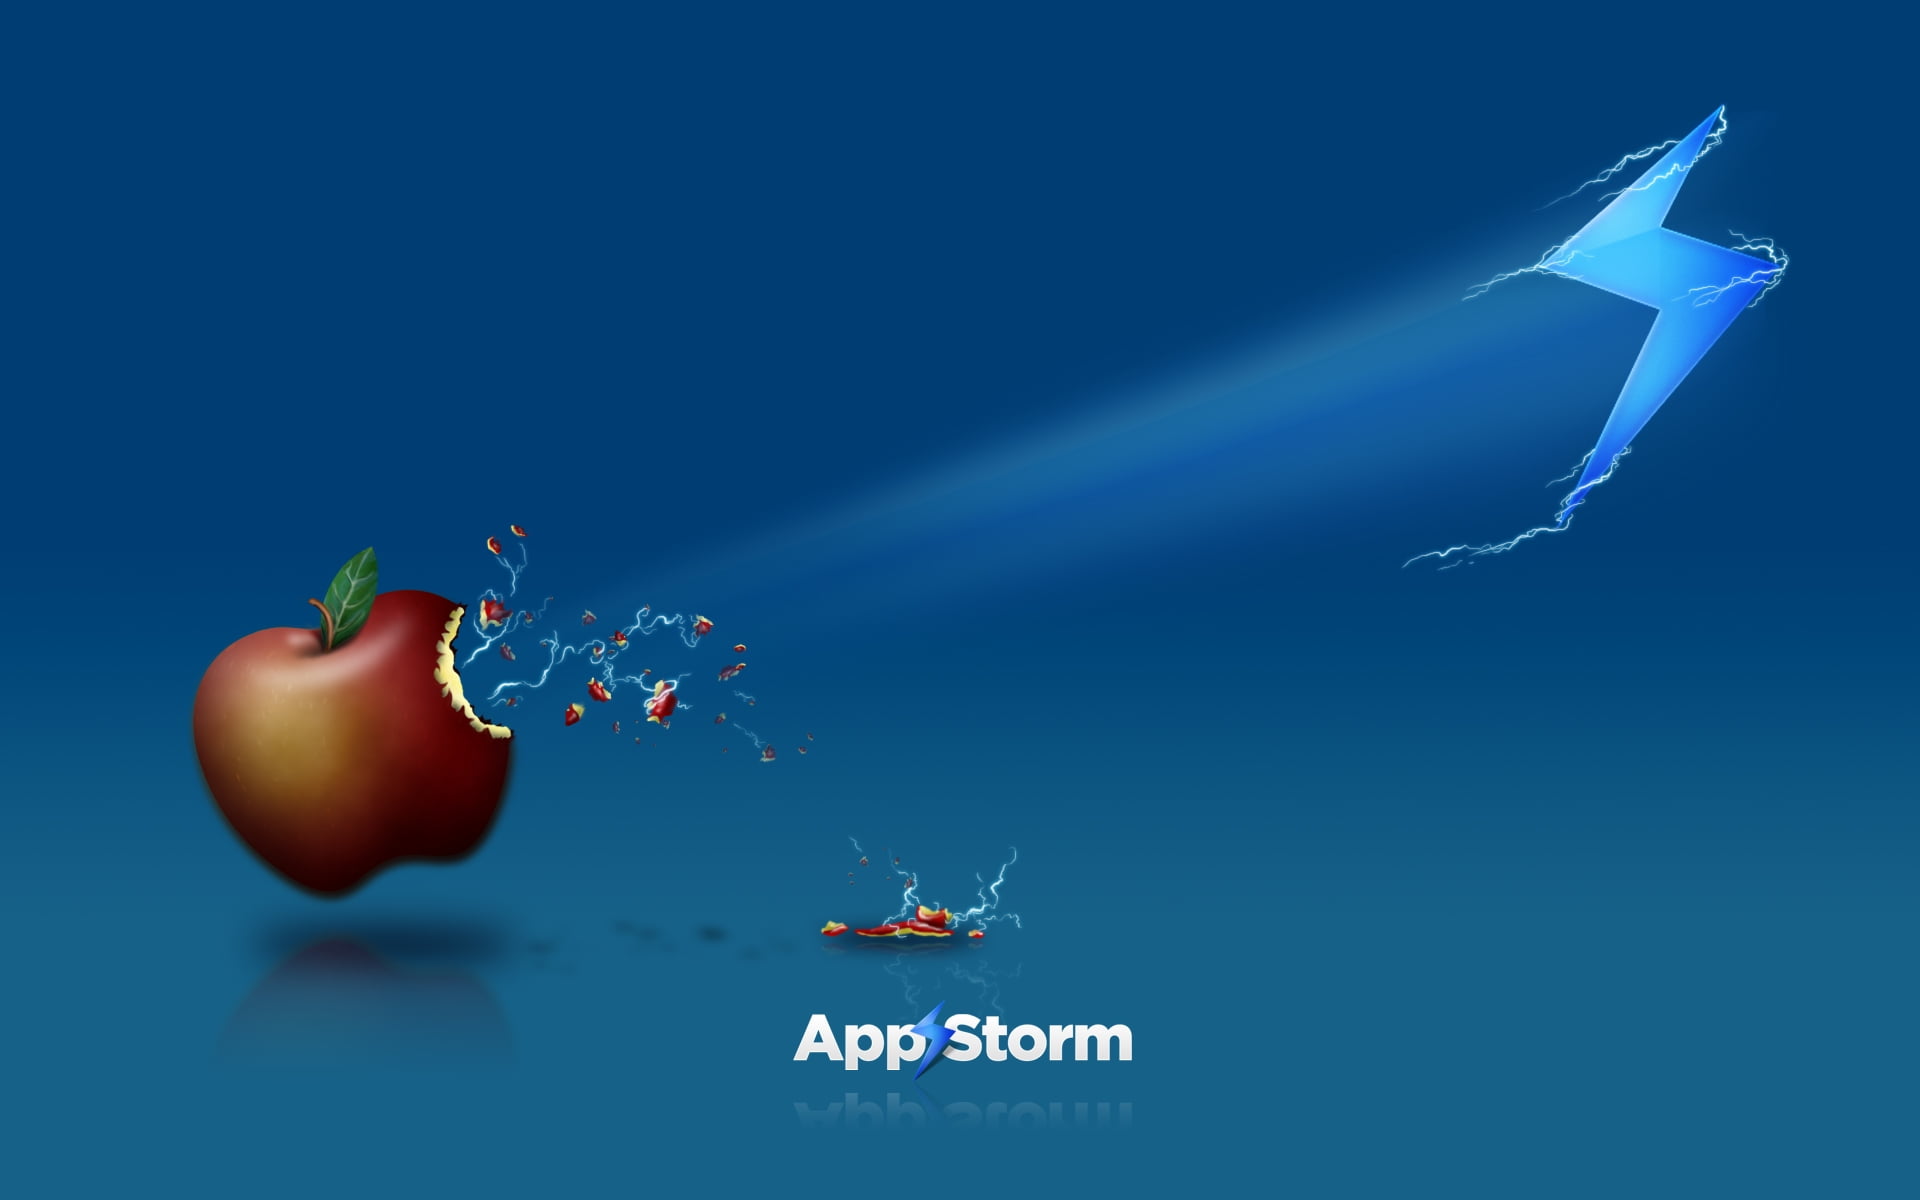 bitten apple App Storm illustration